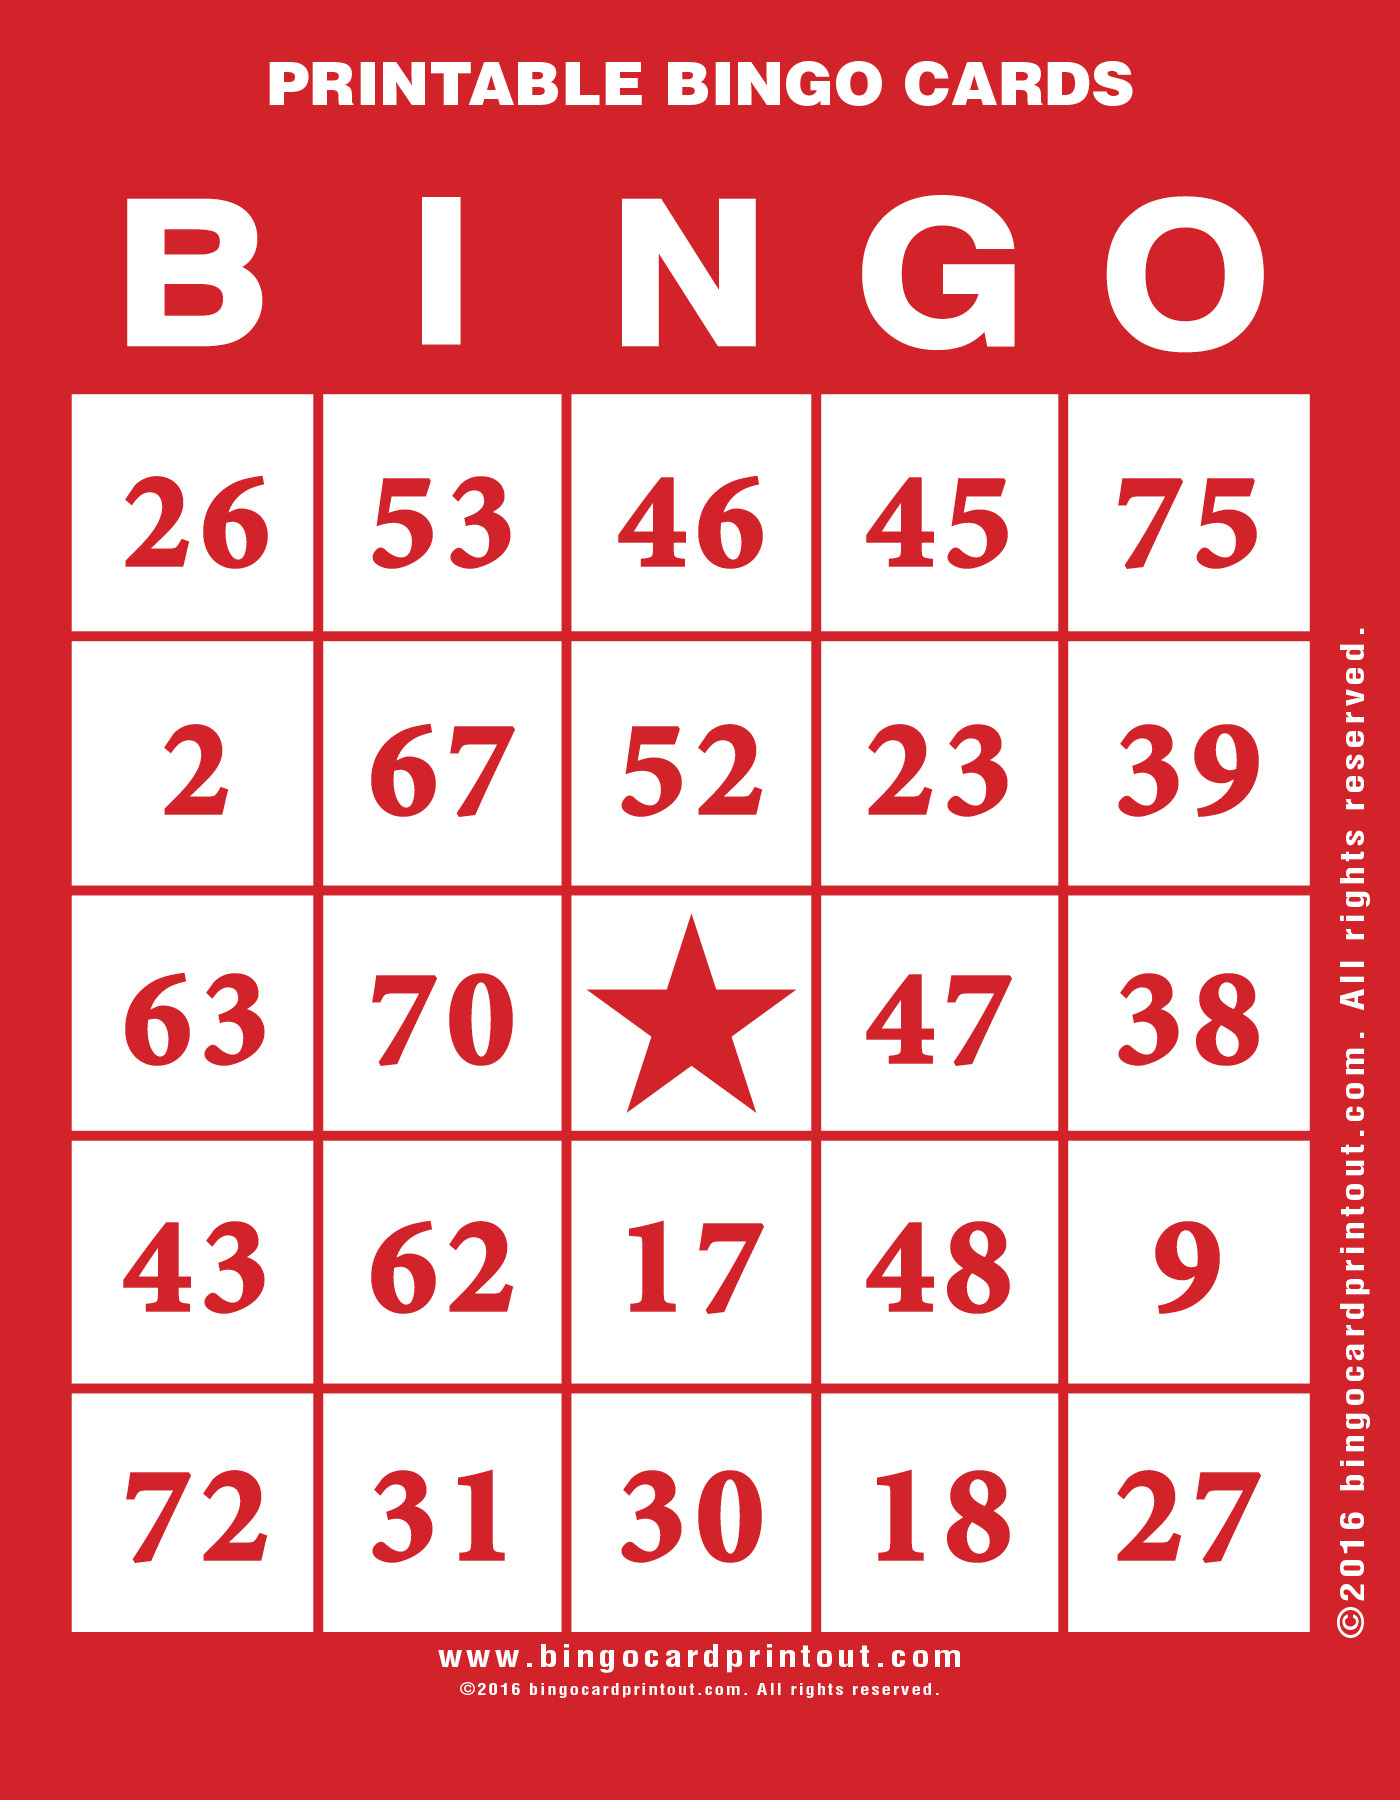 Printable Bingo Cards From Bingocardprintout